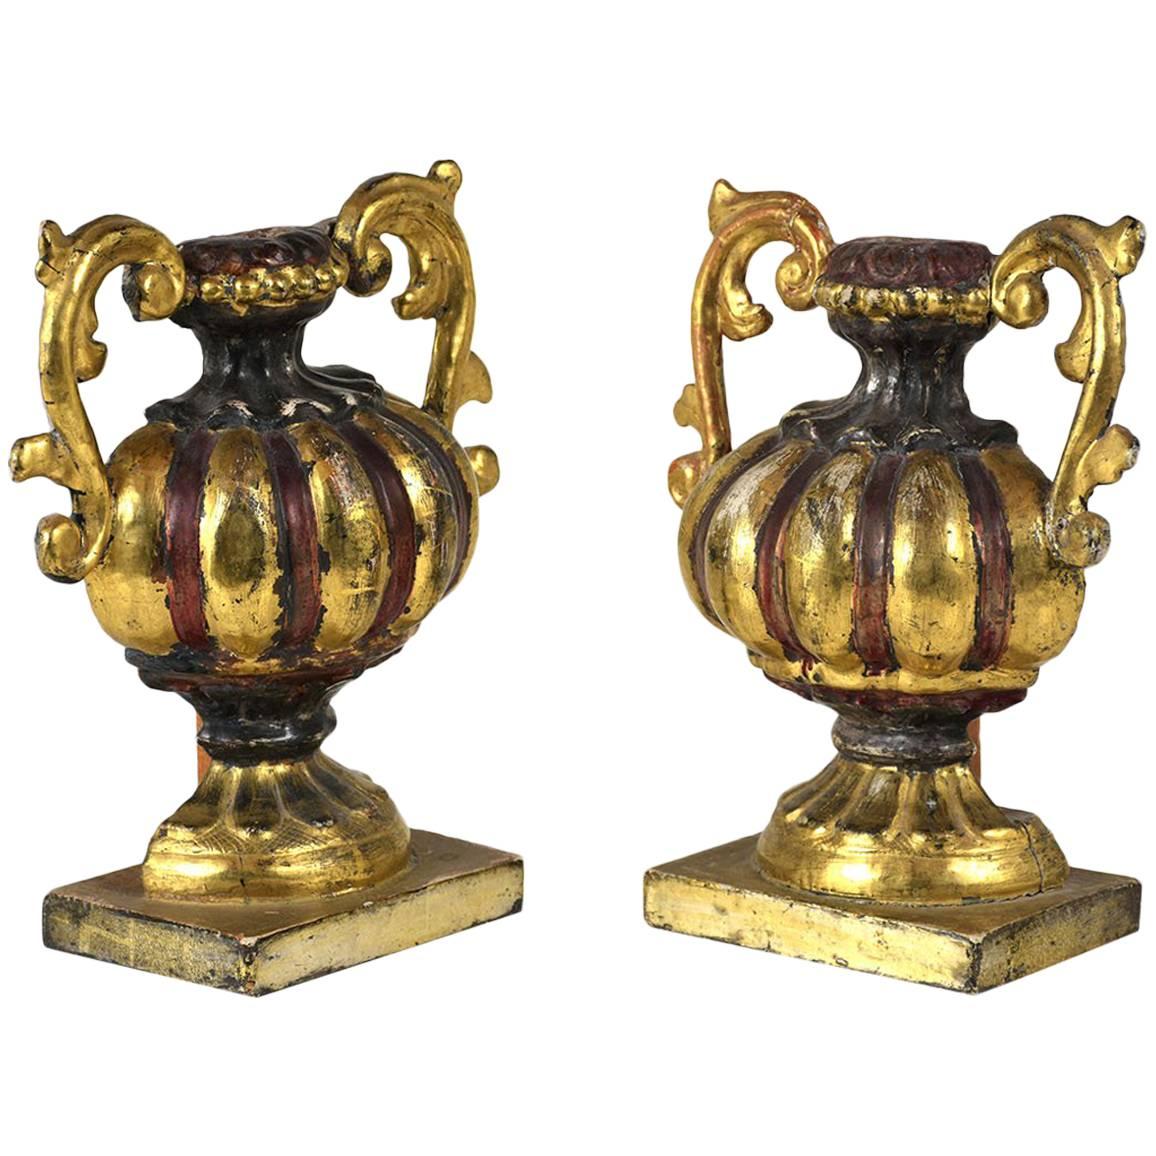 Pair of Italian Giltwood Urns, circa 1840s